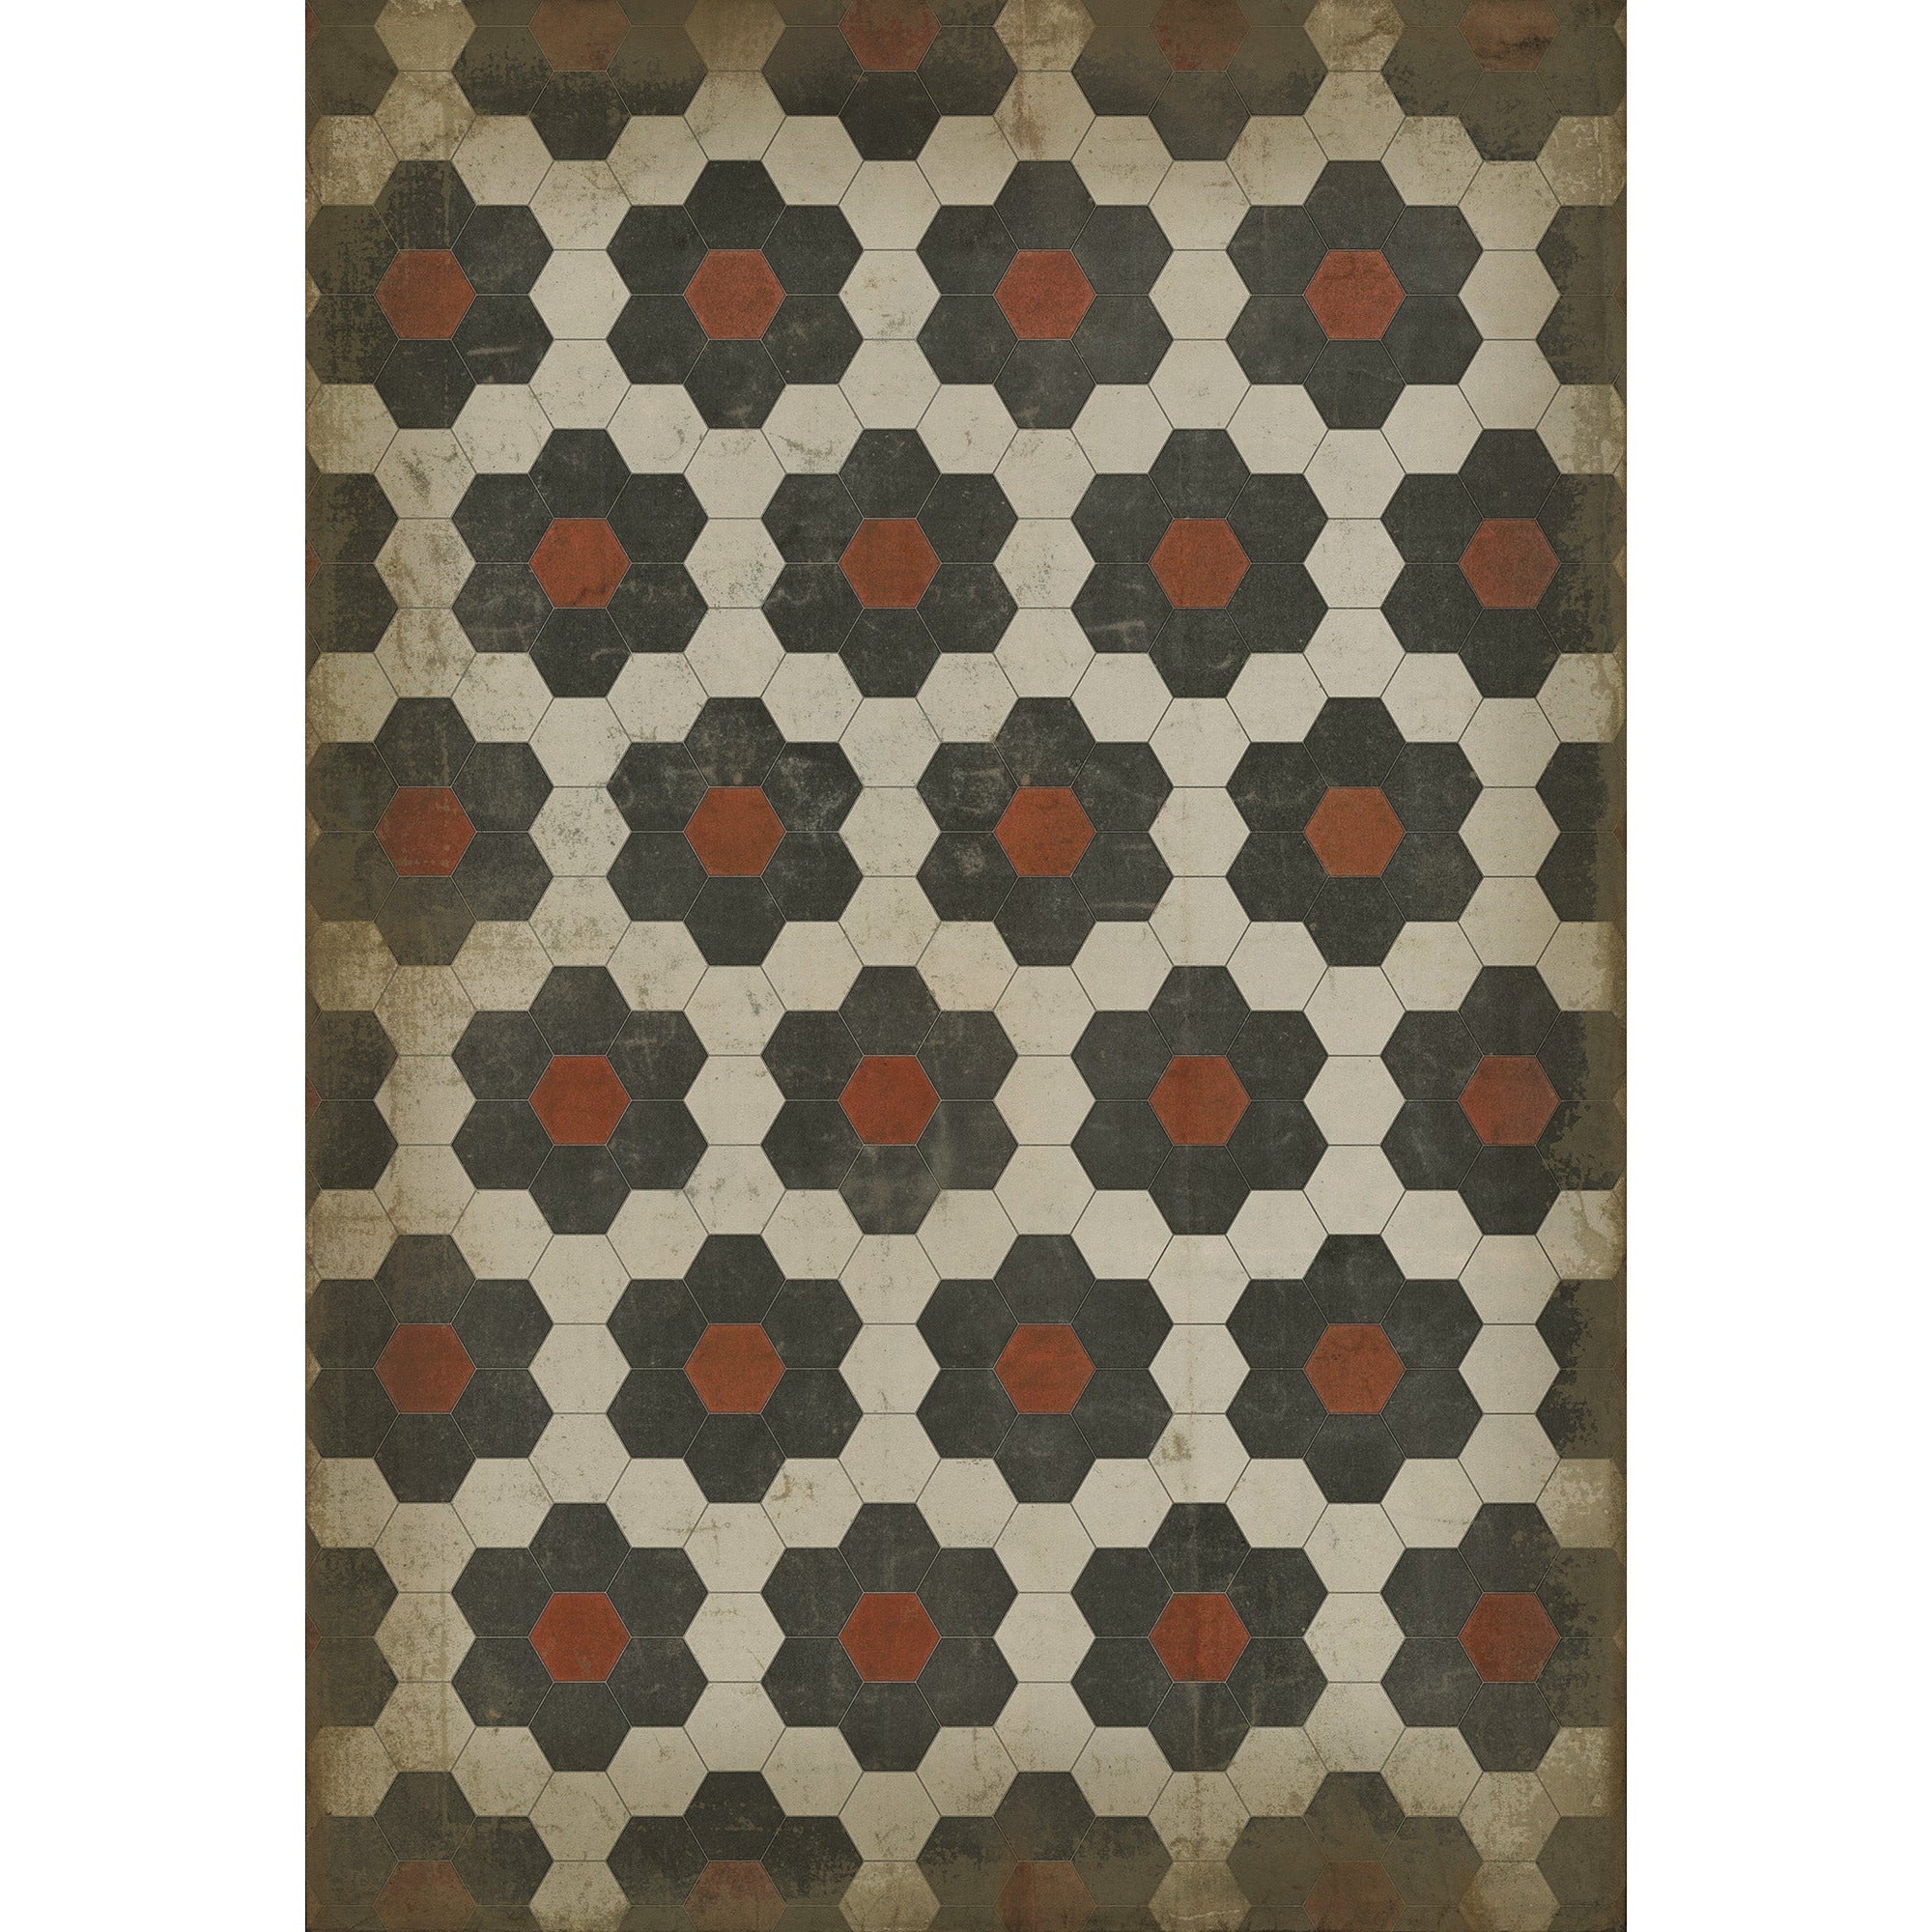 Pattern 02 Organic Synthesis Vinyl Floor Cloth